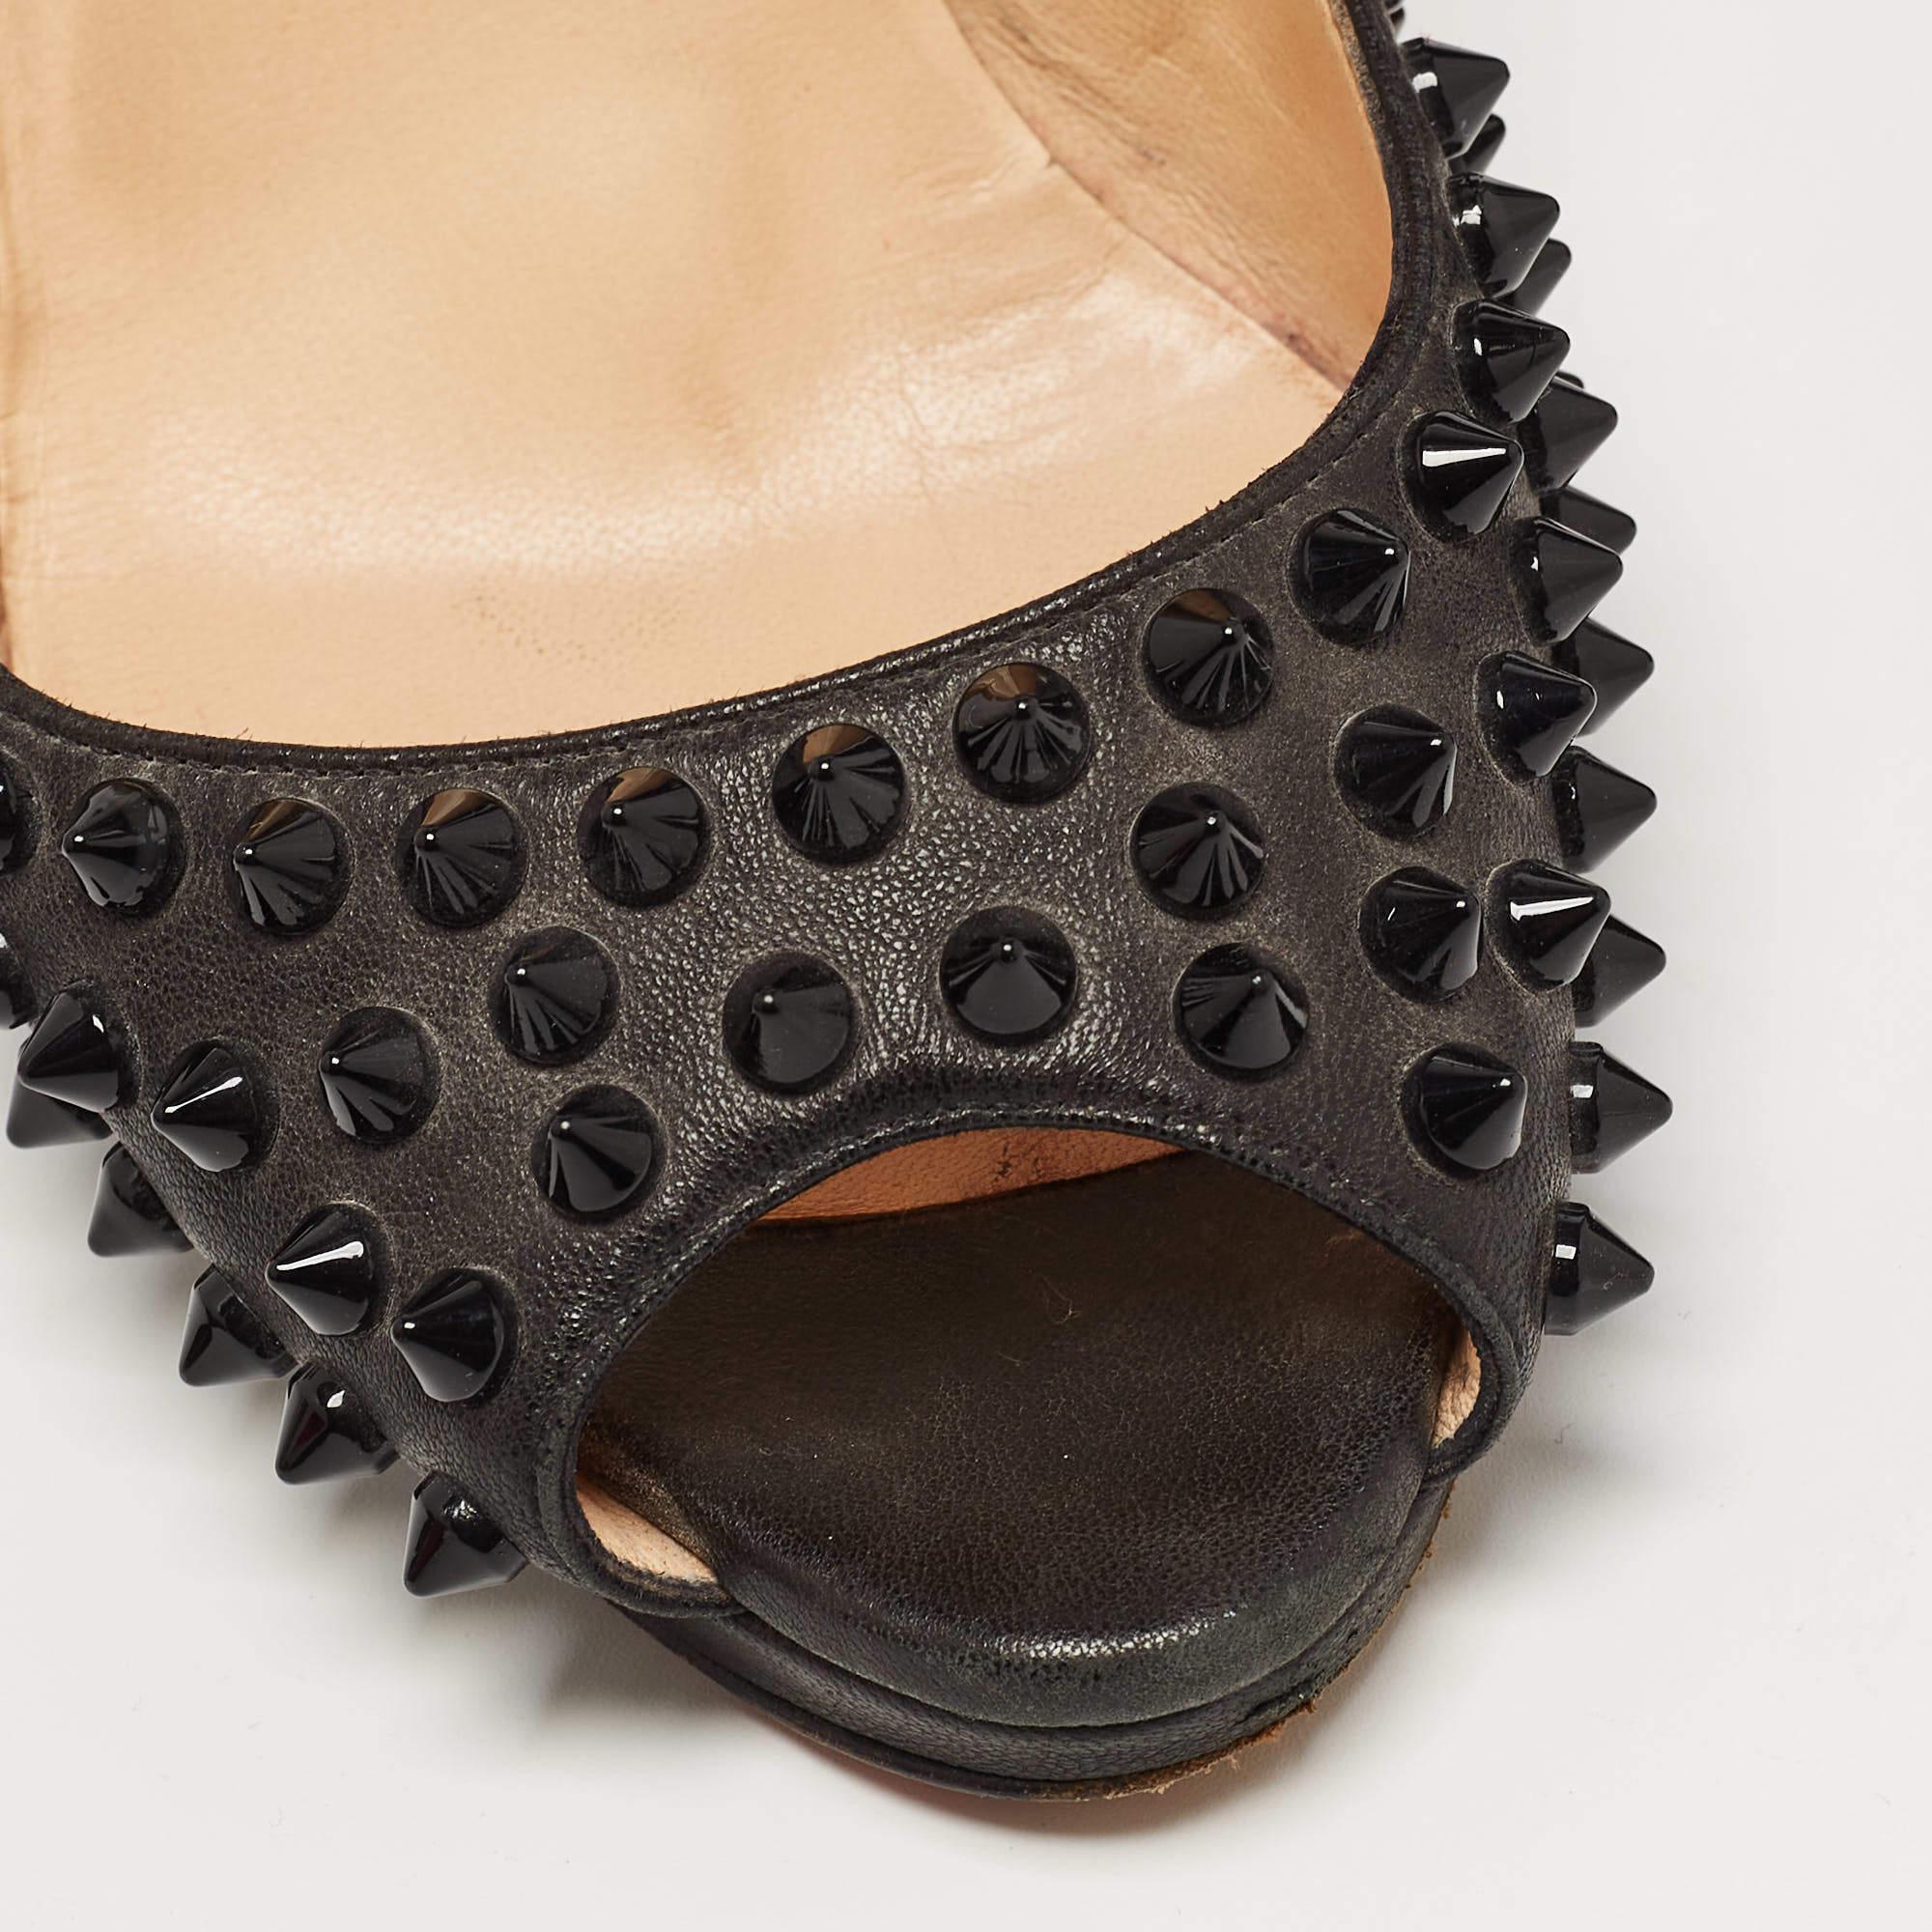 Christian Louboutin Black Leather Yolanda Spikes Pumps Size 37.5 For Sale 2